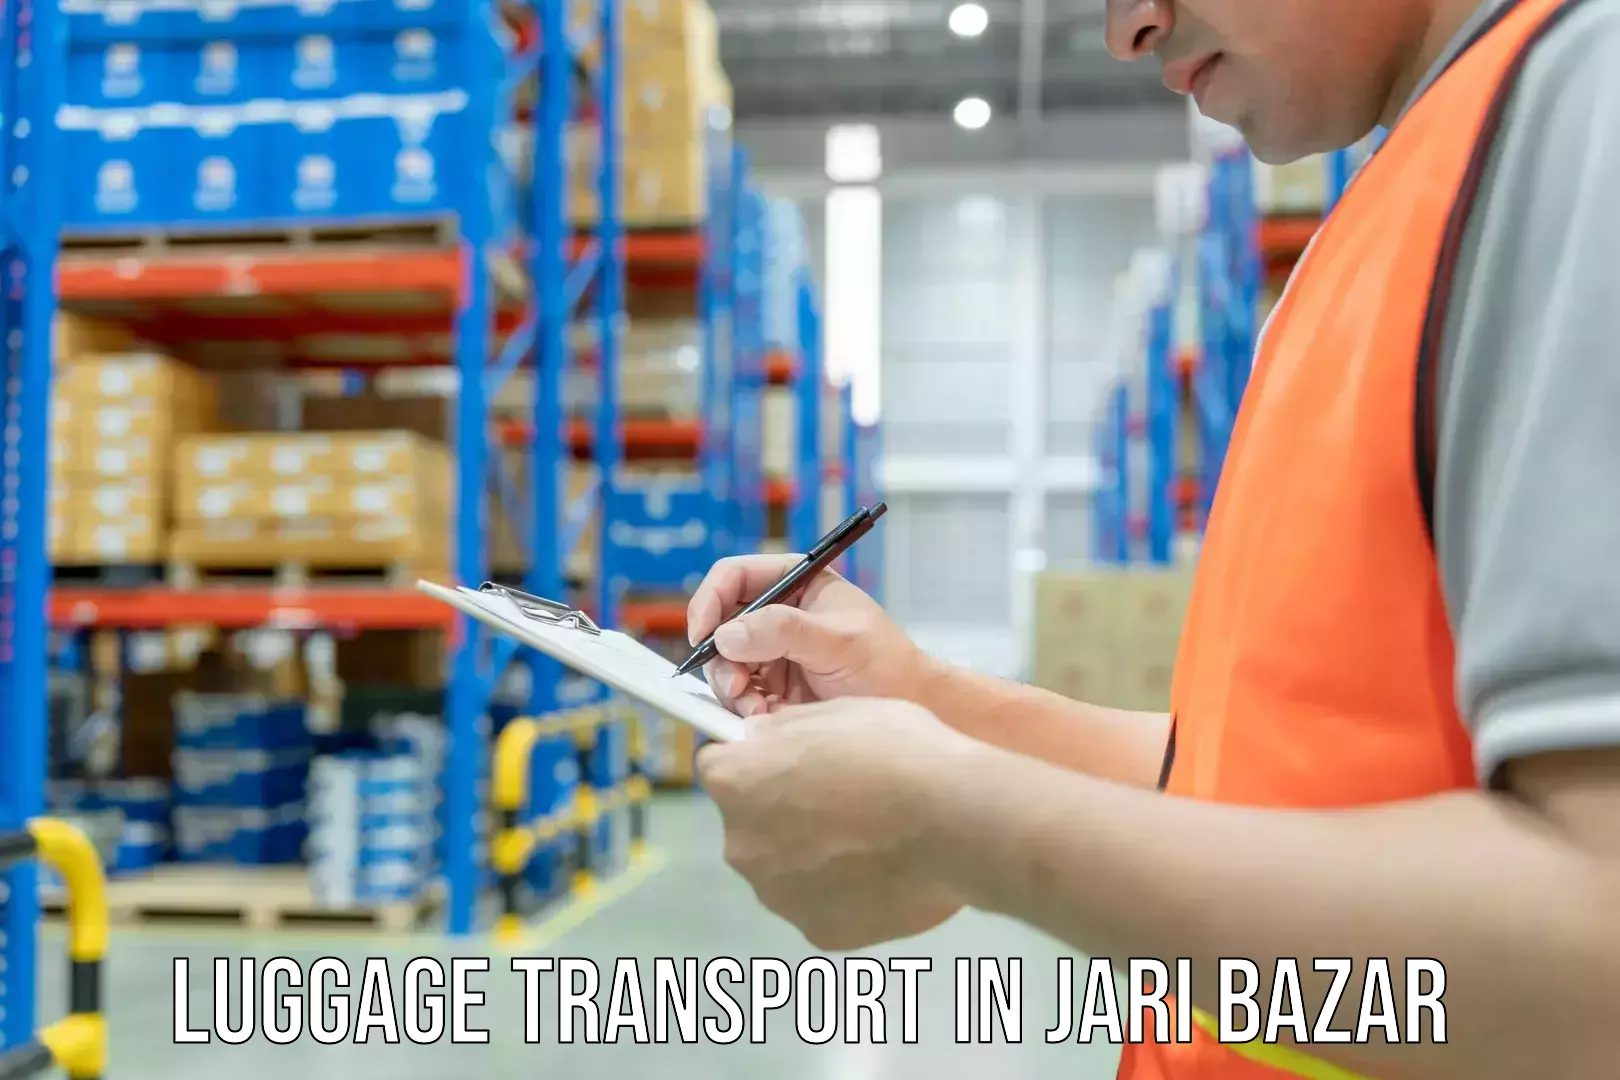 Luggage transport pricing in Jari Bazar